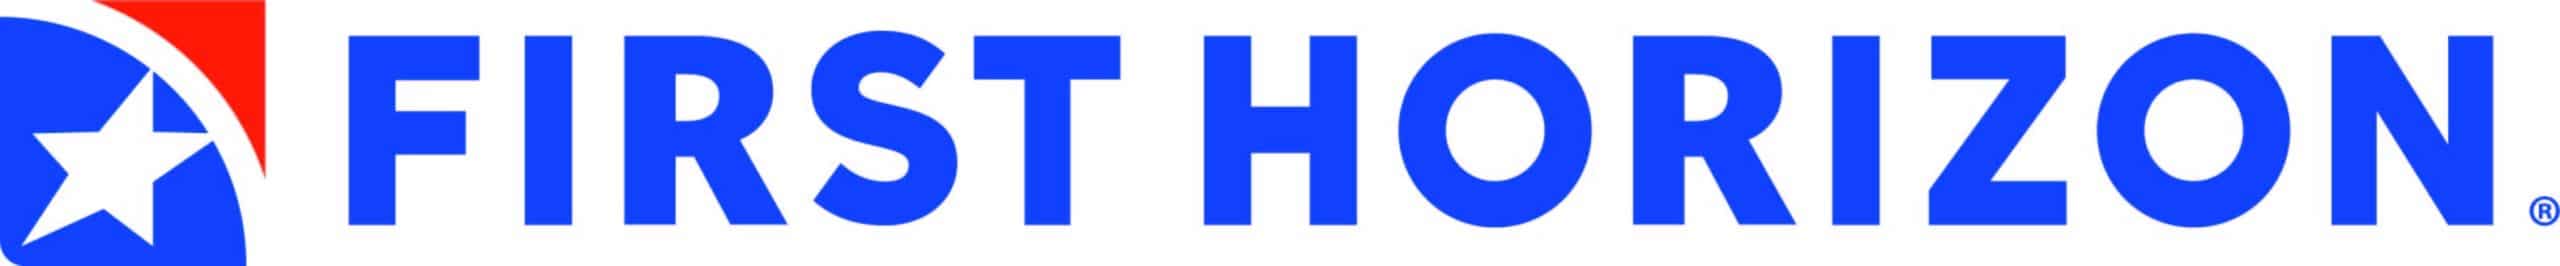 logo for ASCG sponsor, First Horizon